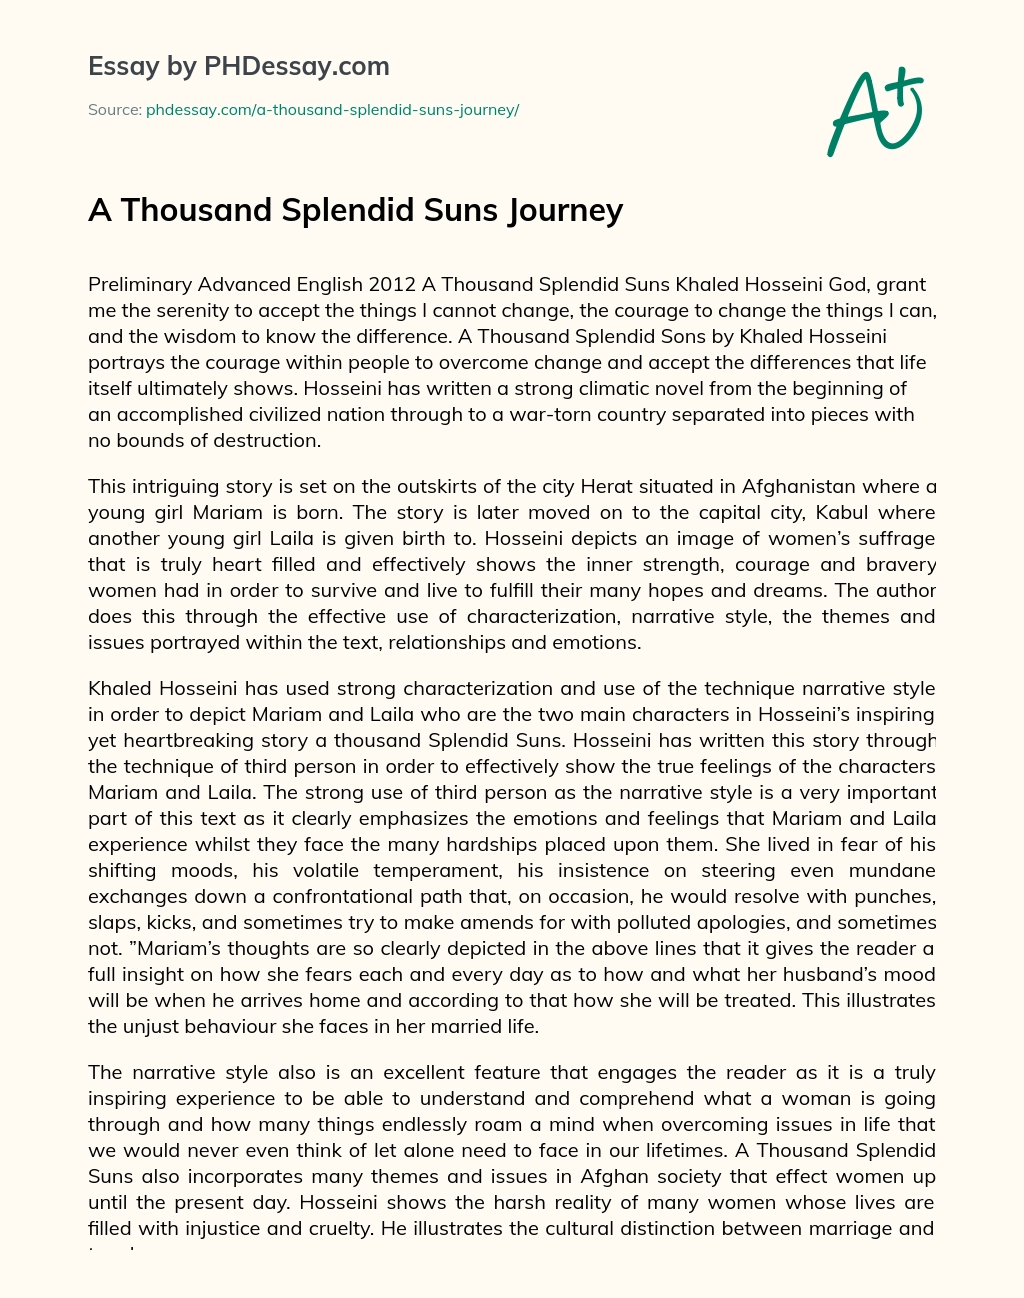 A Thousand Splendid Suns Journey essay